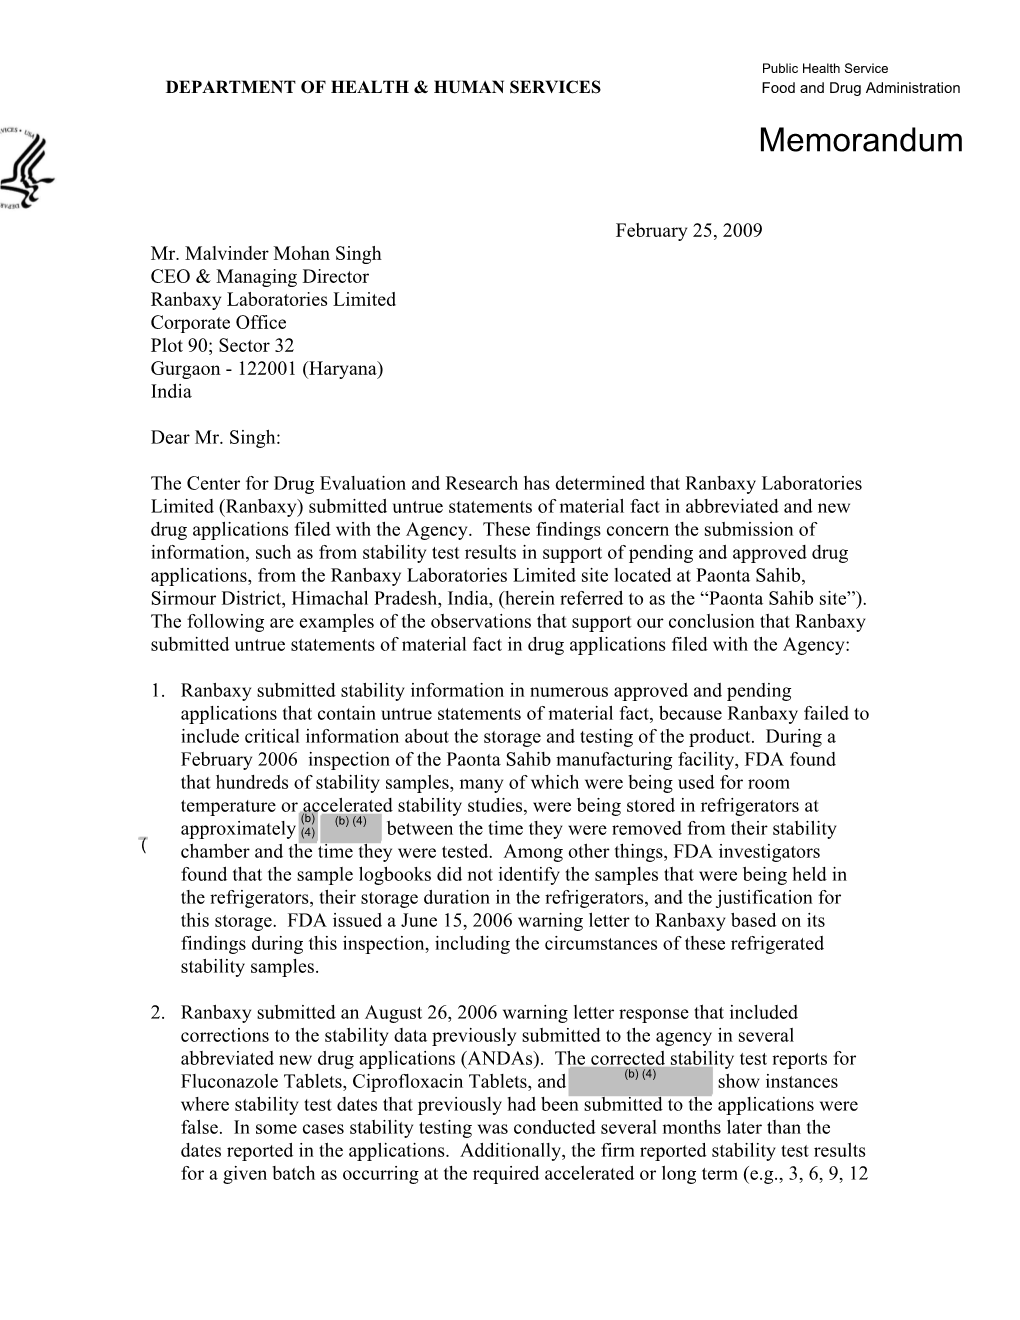 FDA AIP Letter to Ranbaxy Laboratories